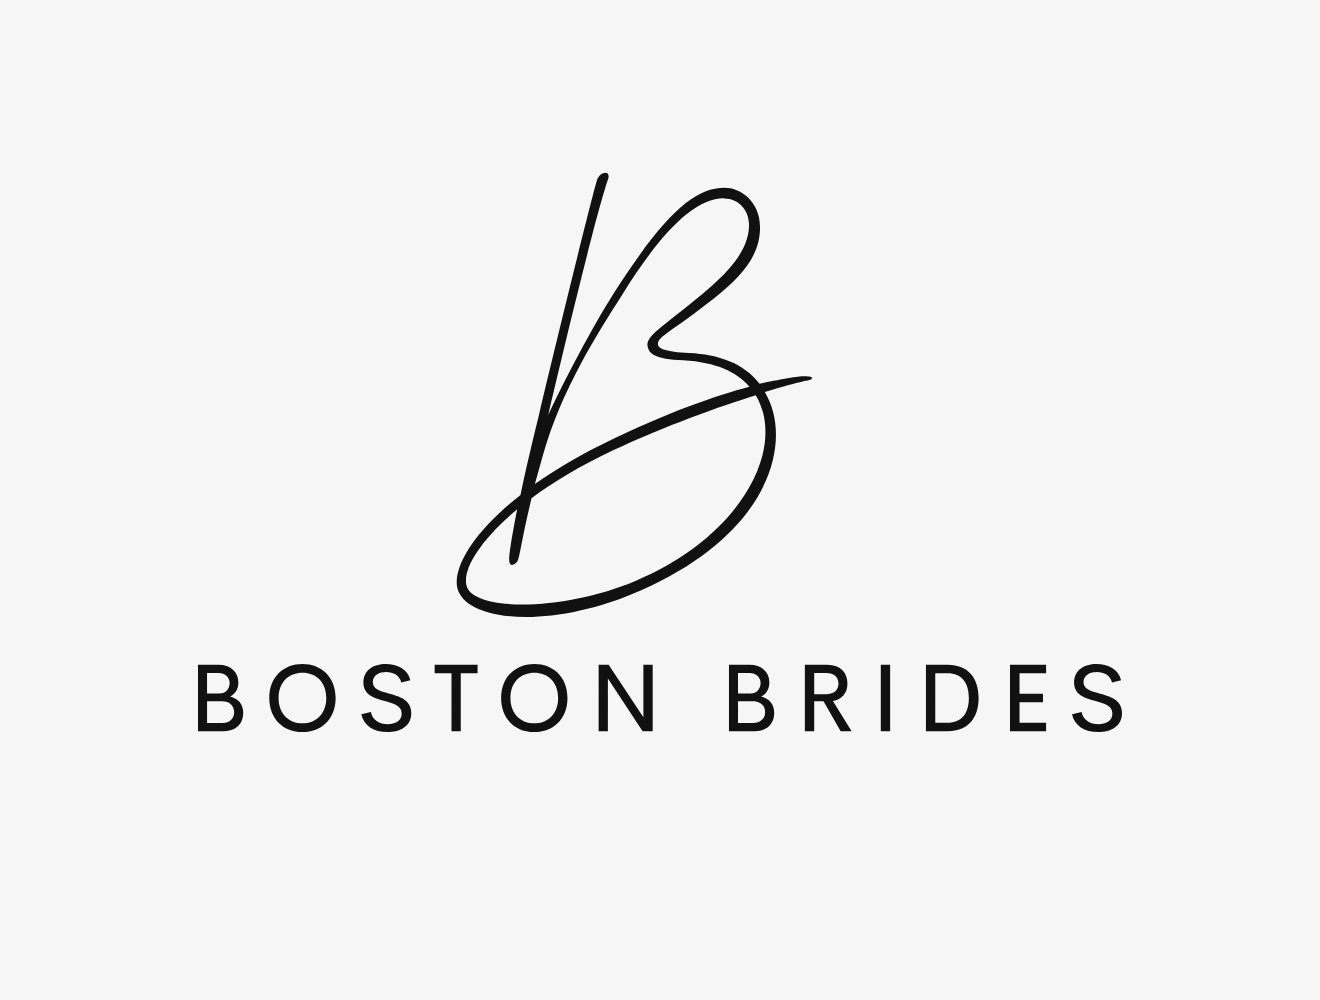 Bostonbrides.com